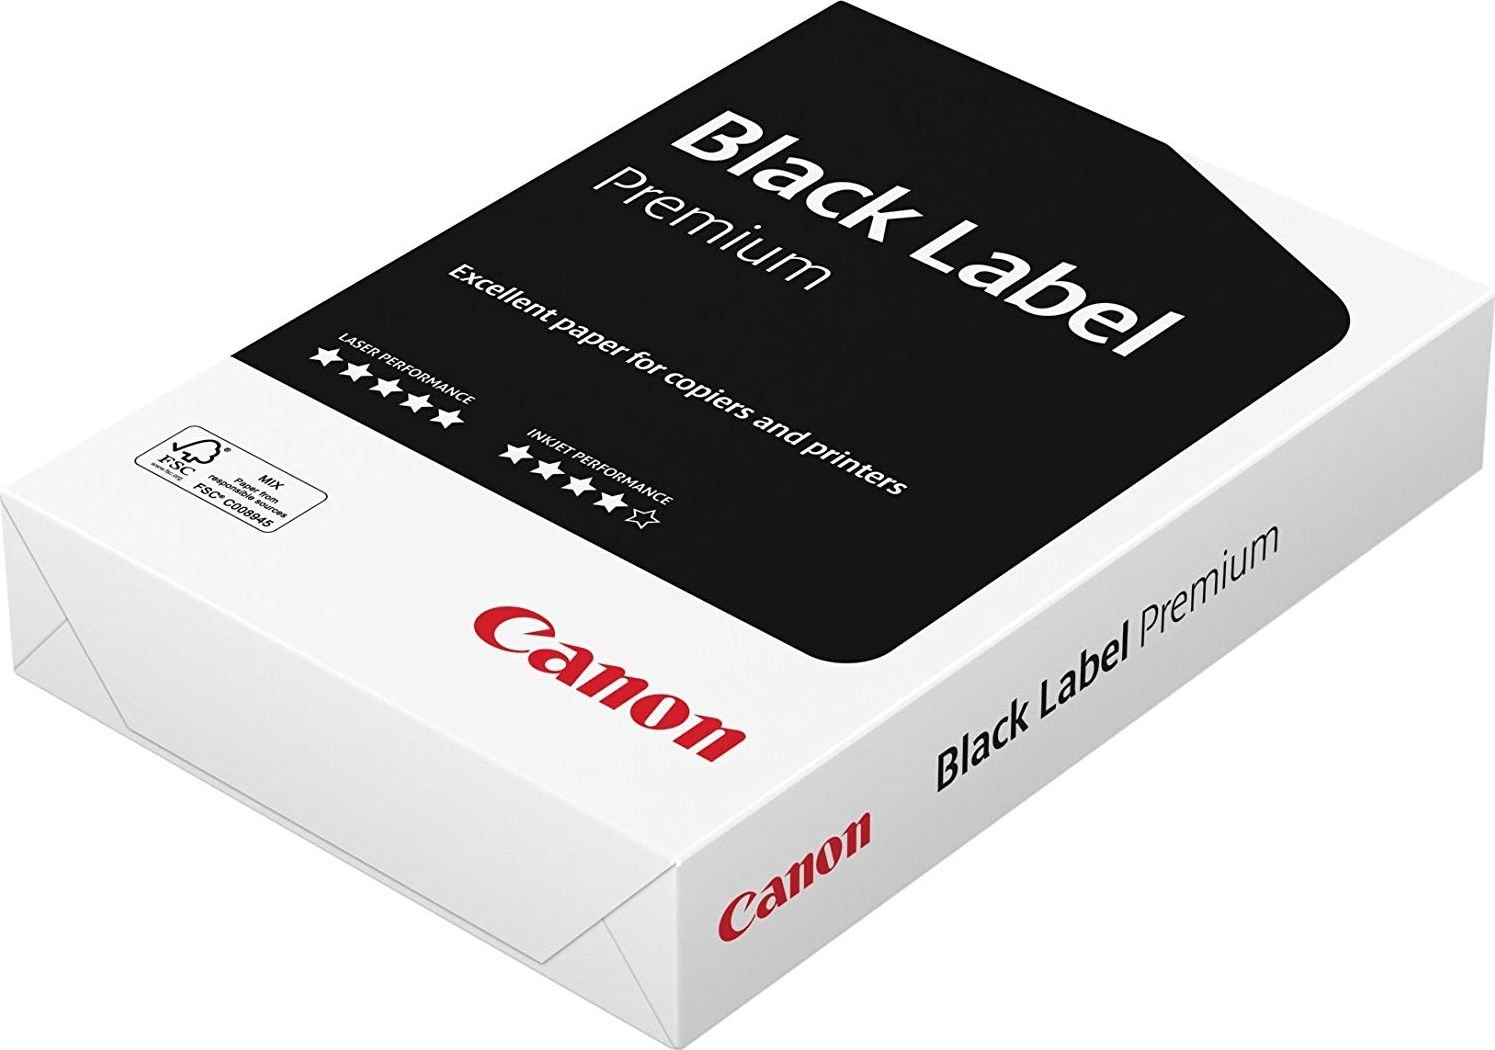 Hartie si produse din hartie - Hartie copiator Canon Black Label Premium, 500 Coli/Top, 75 g/m², Hartie pentru Xerox si Imprimanta